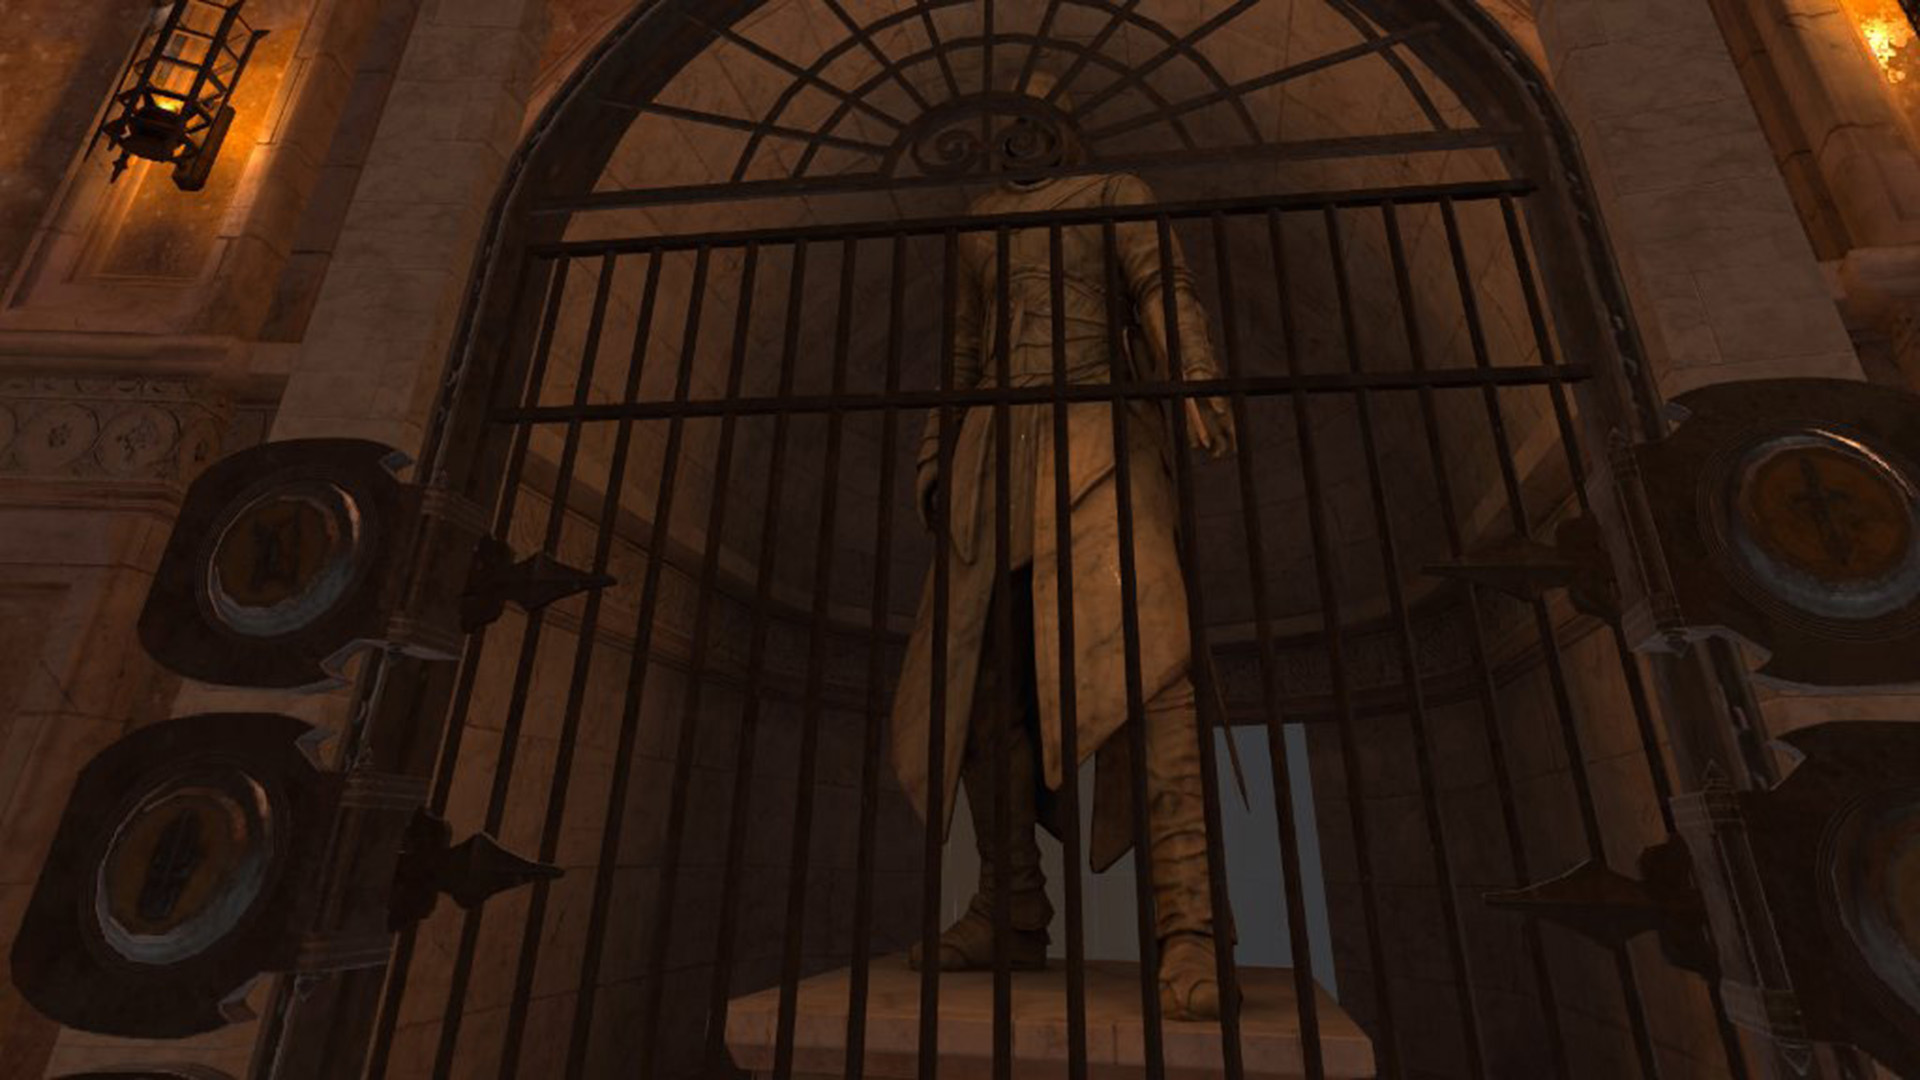 Assassins Creed Nexus VR